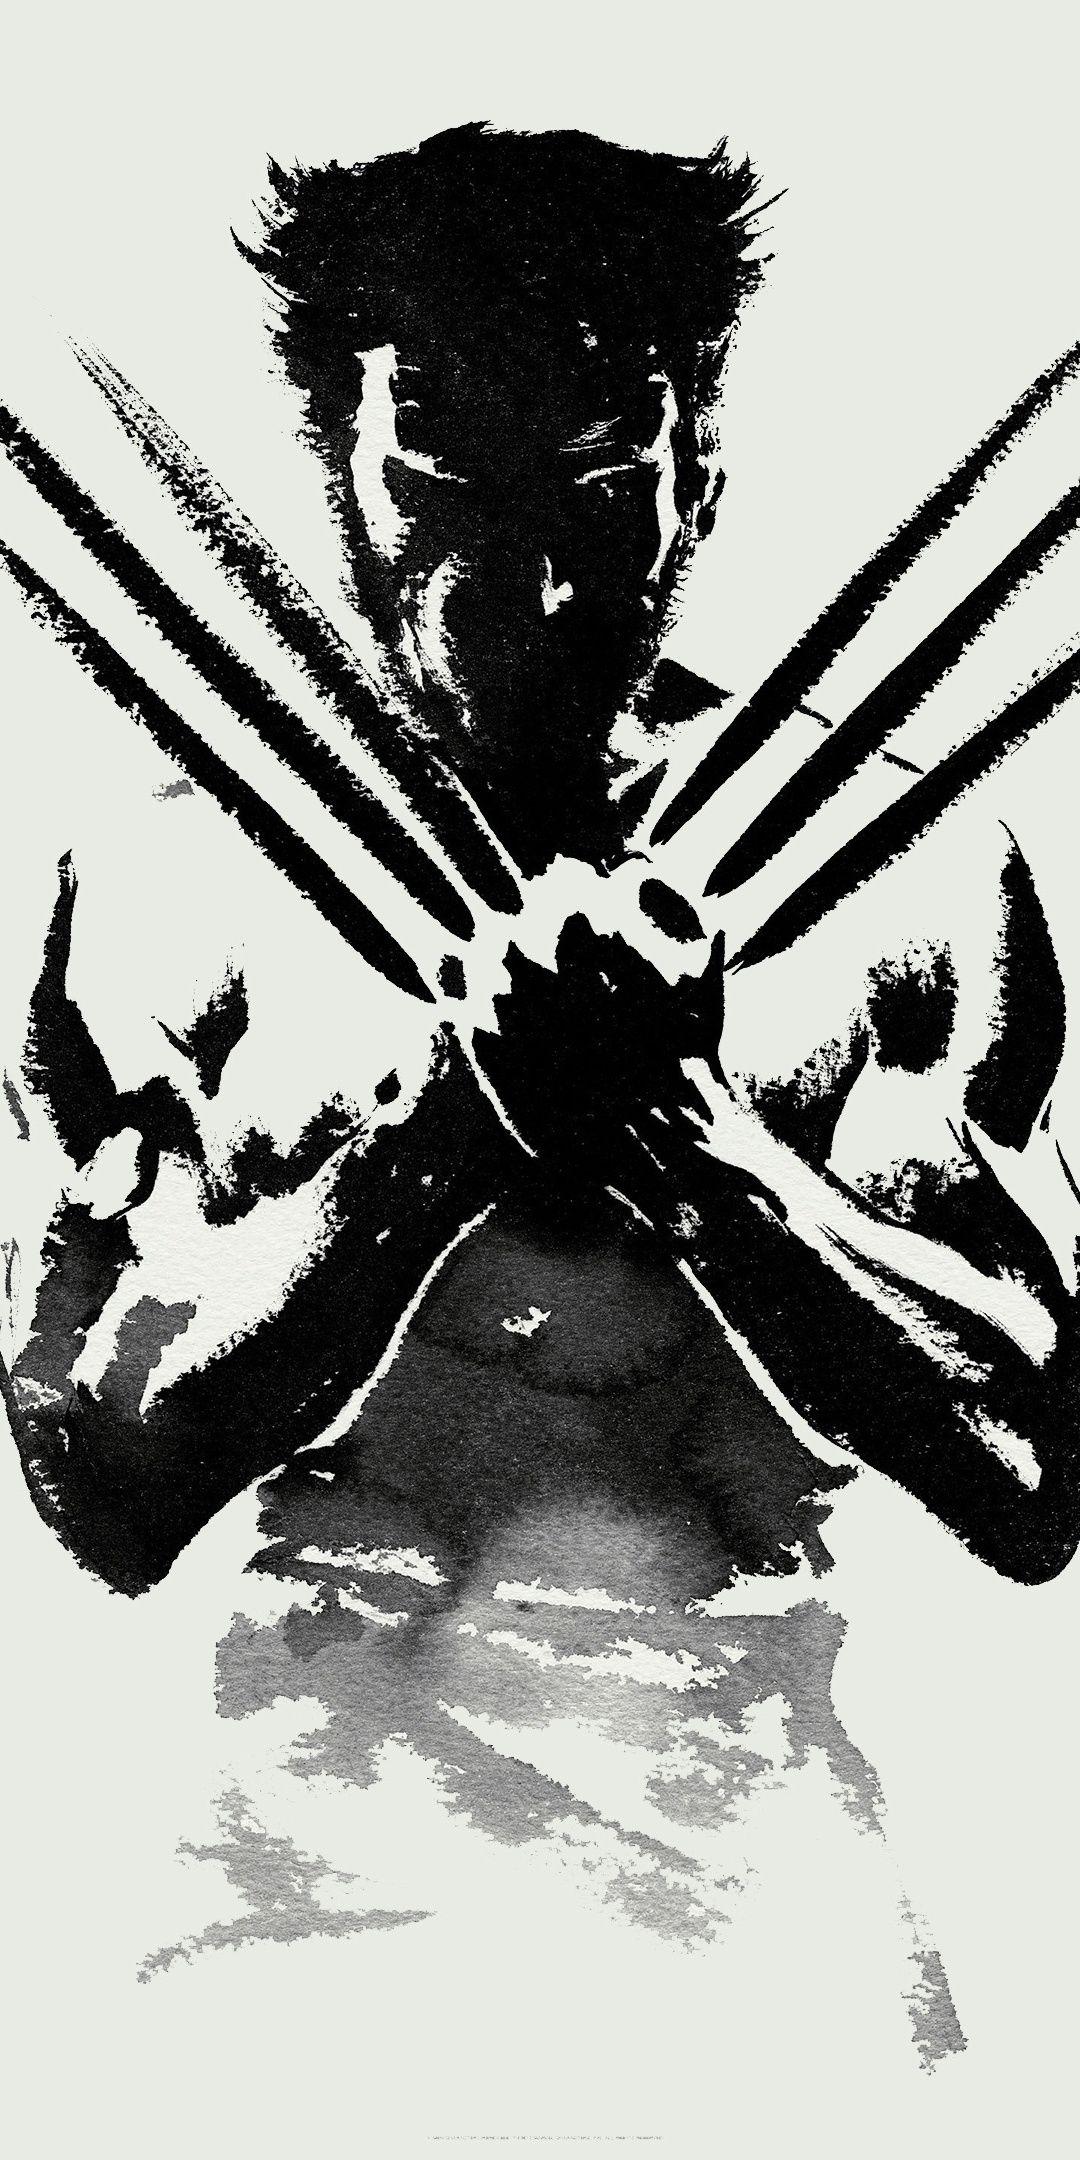 Wolverine X-Men Art Wallpapers - Wallpaper Cave